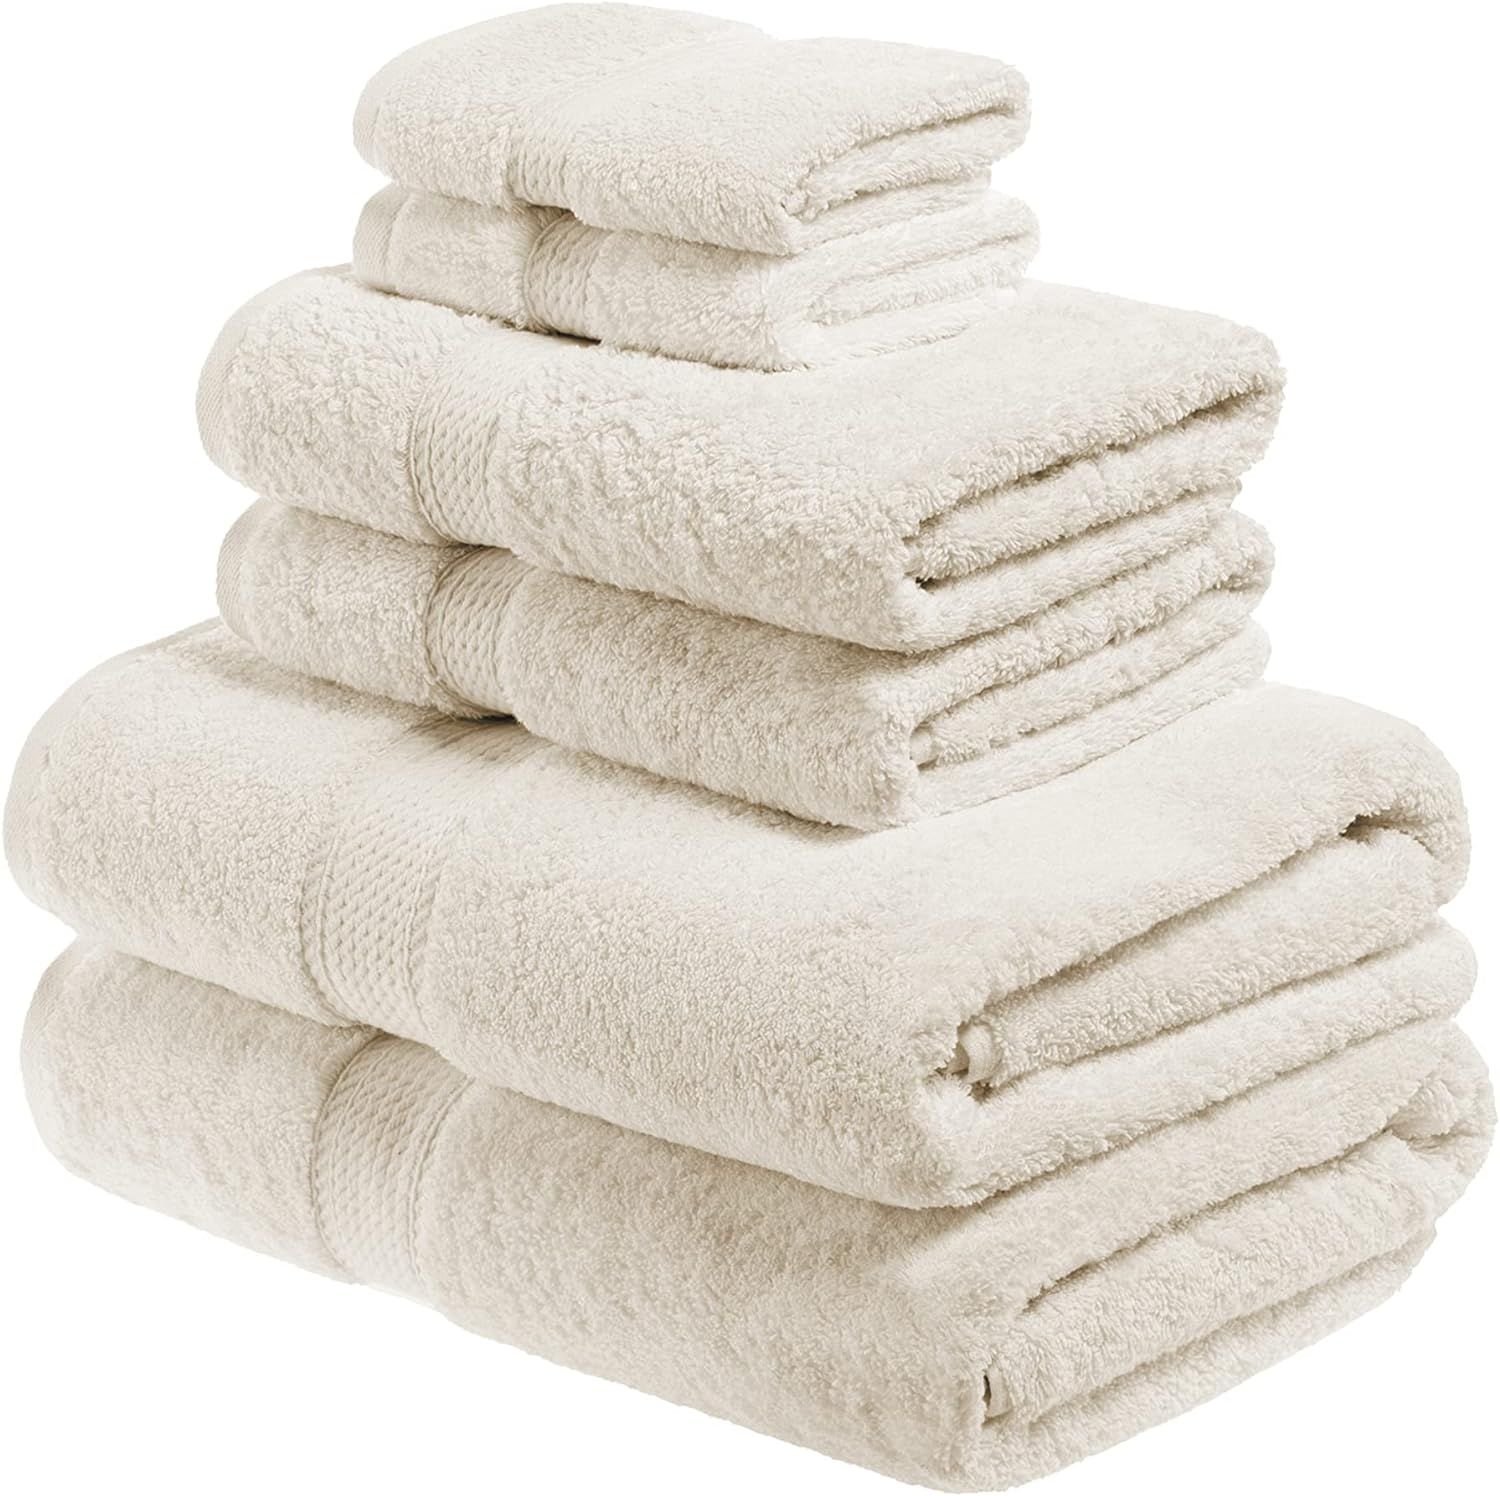 Superior Egyptian Cotton Pile 6 Piece Towel Set, Includes 2 Bath, 2 Hand, 2 Face Towels/Washcloth... | Amazon (US)